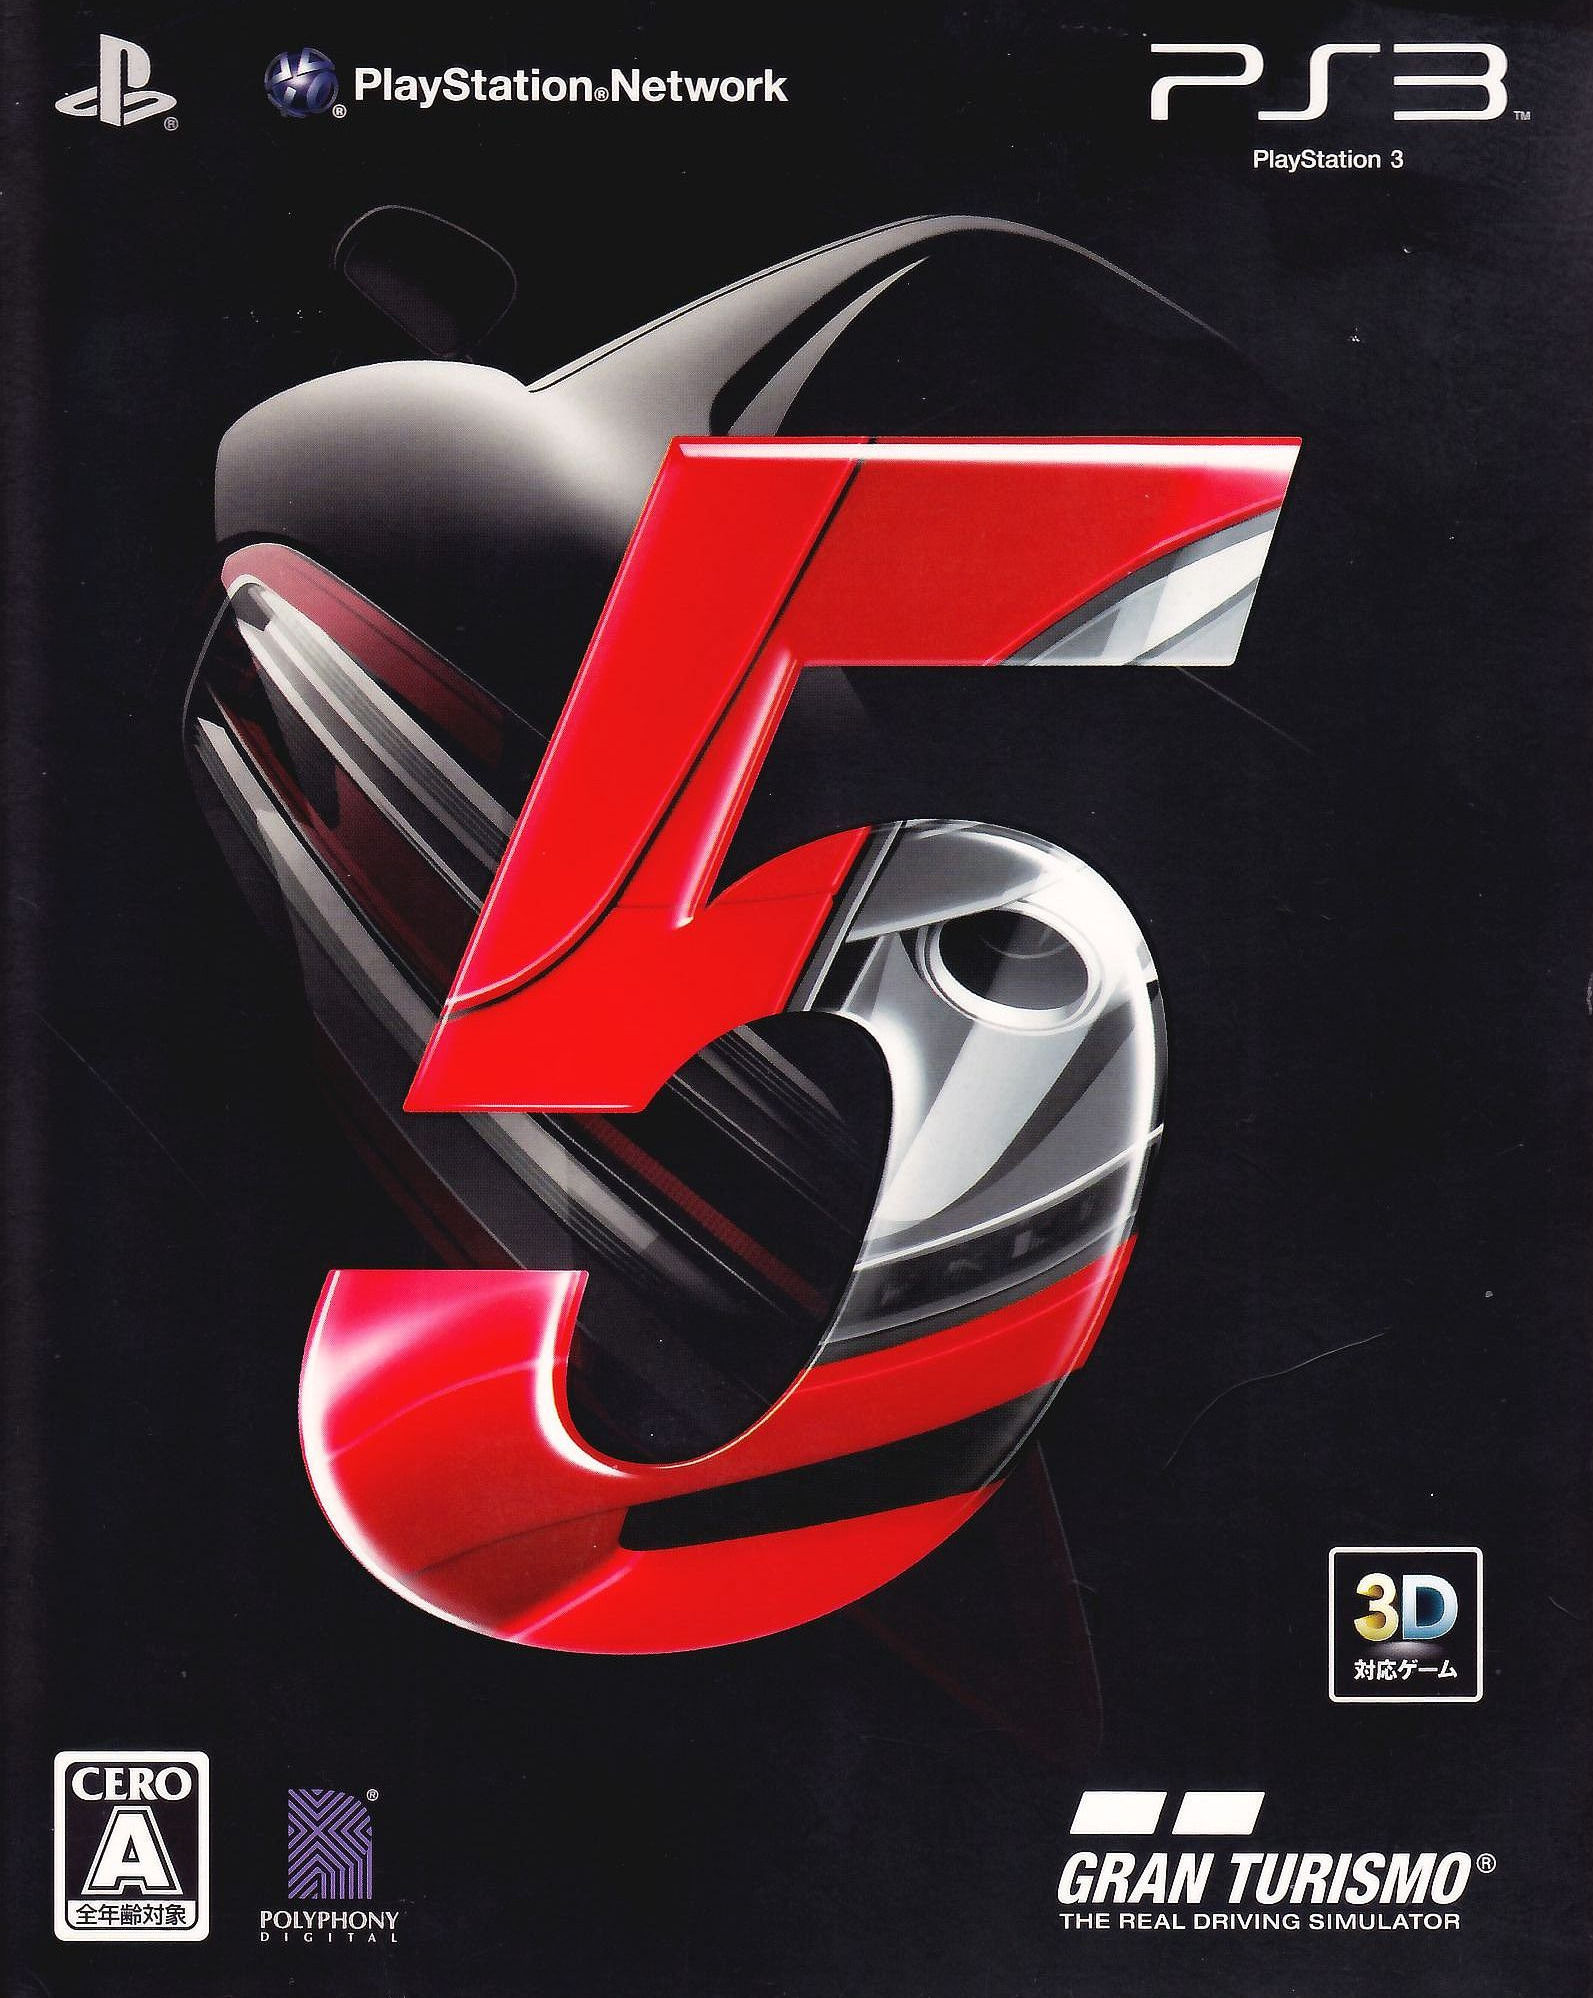 Gran Turismo 4 Box Shot for PlayStation 2 - GameFAQs